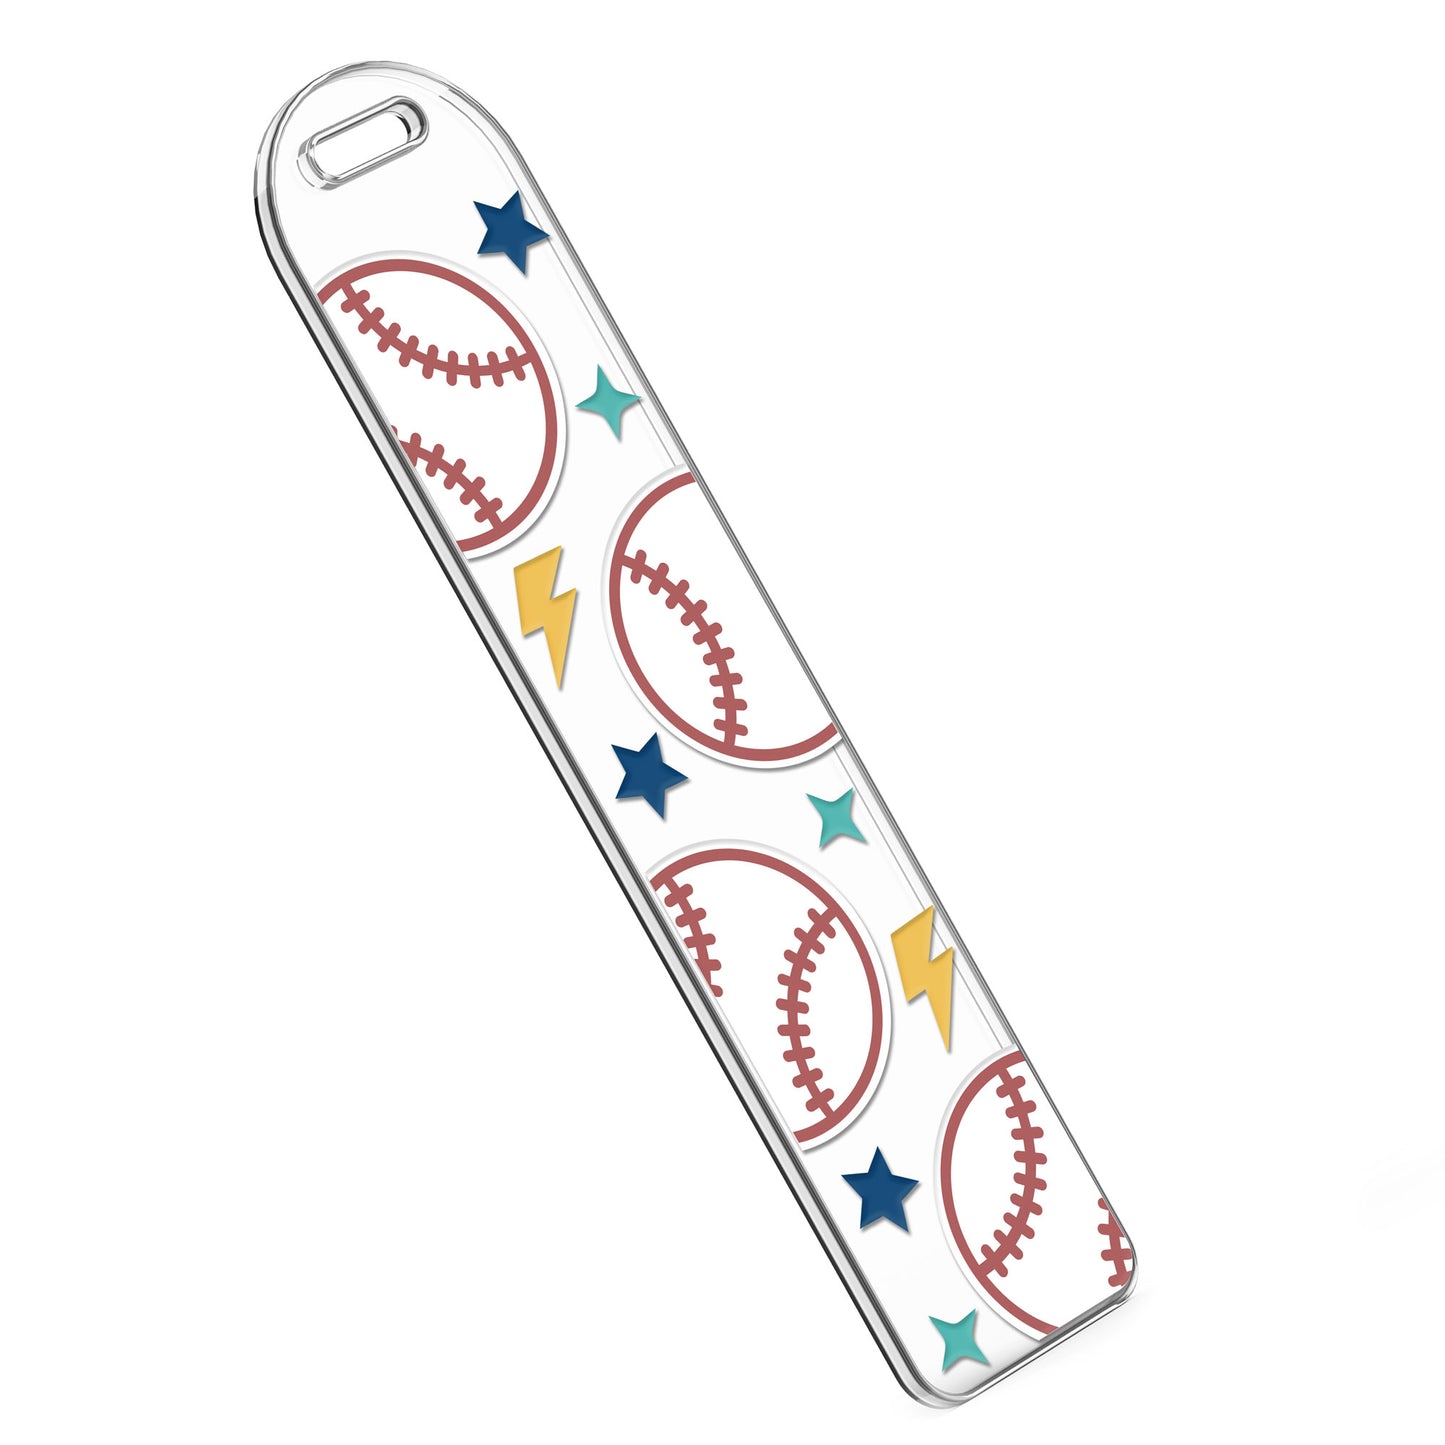 Bookmark UV DTF Decal | Baseball